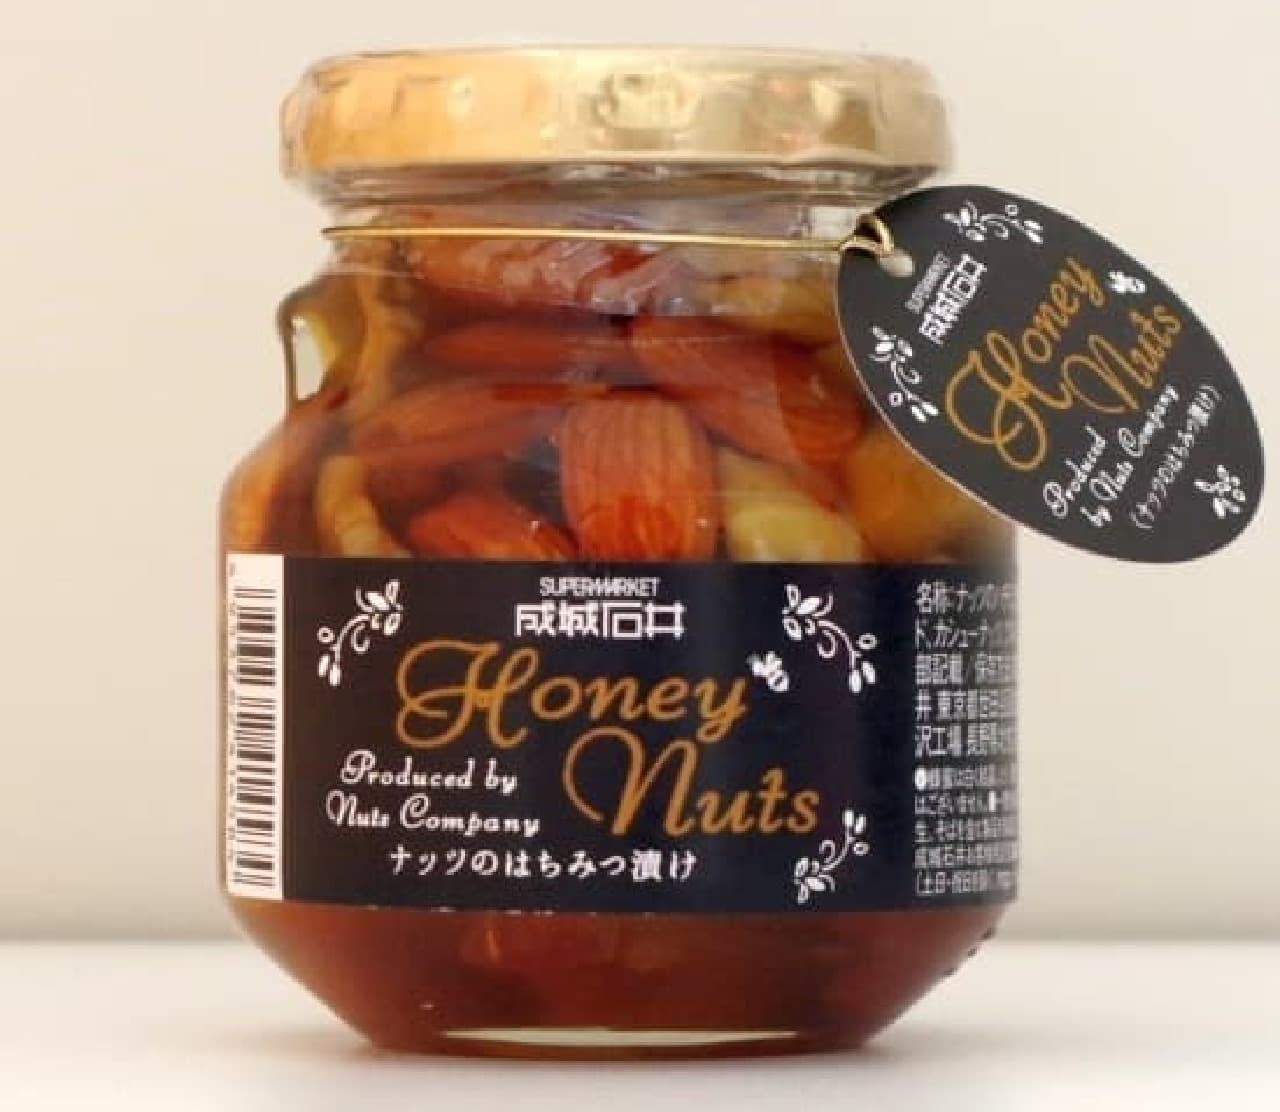 Seijo Ishii "Honey Nuts"